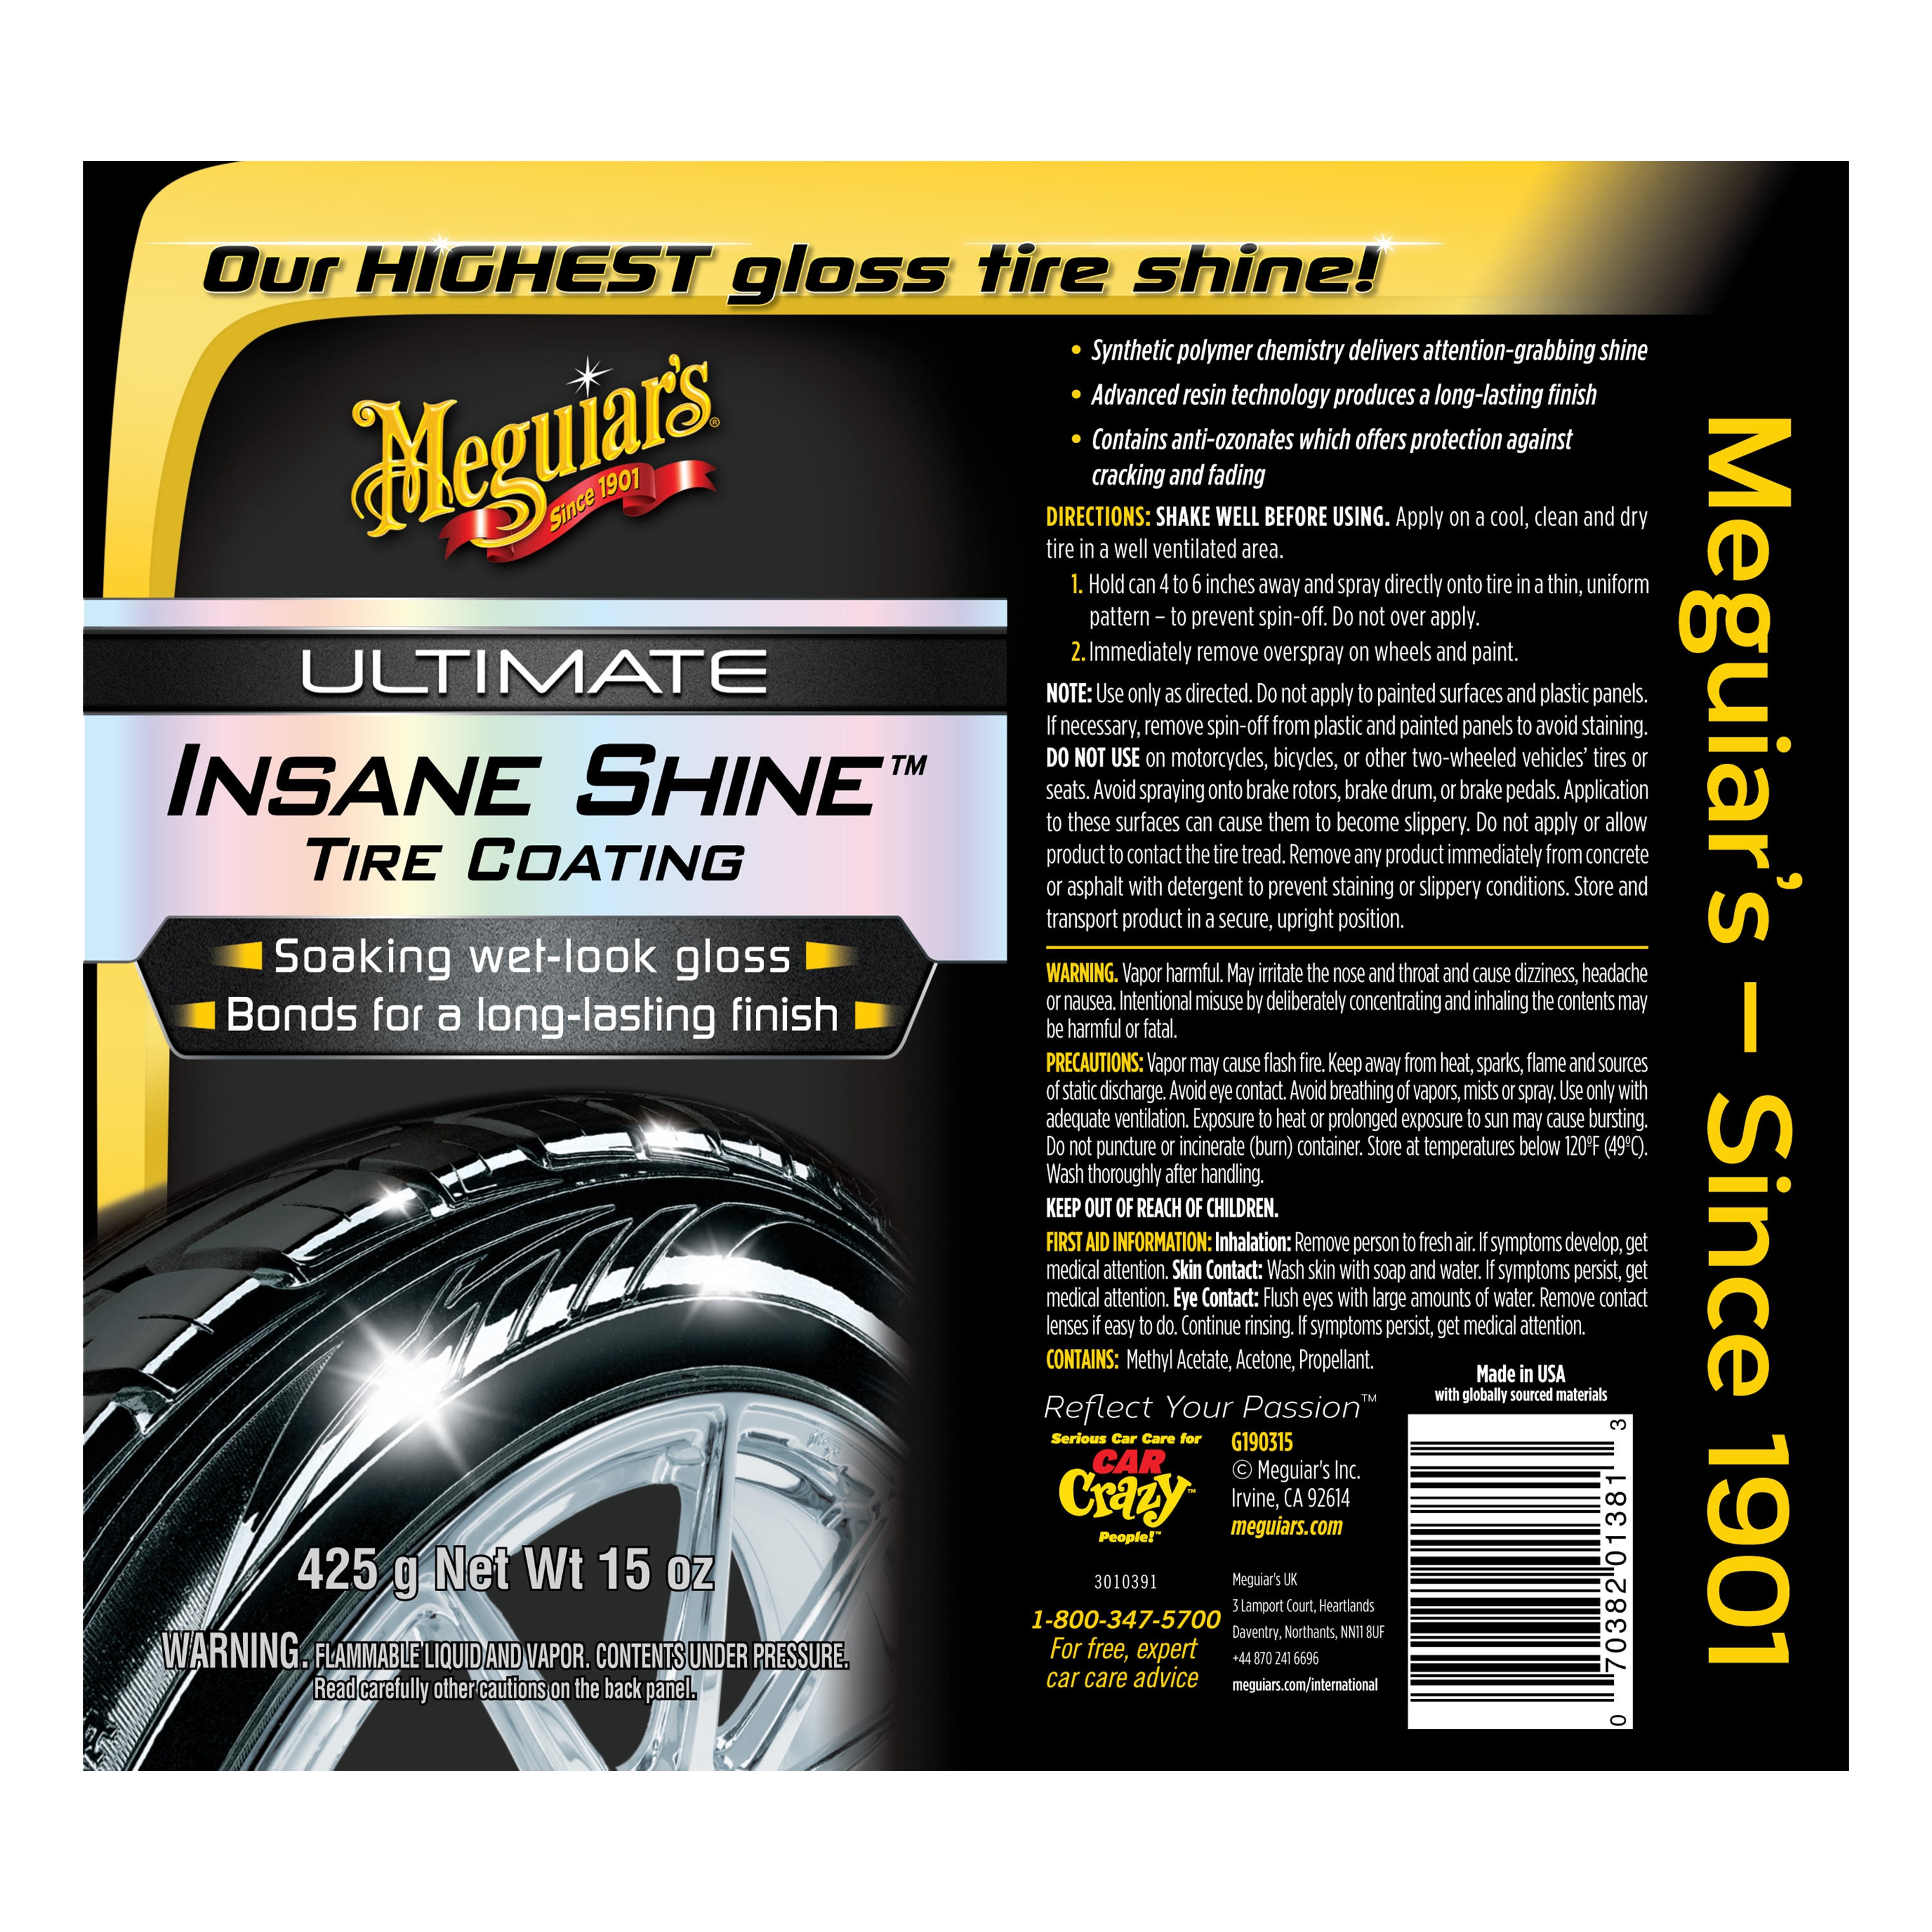 Meguiar's Hot Shine High Gloss Tire Coating - Shop Automotive